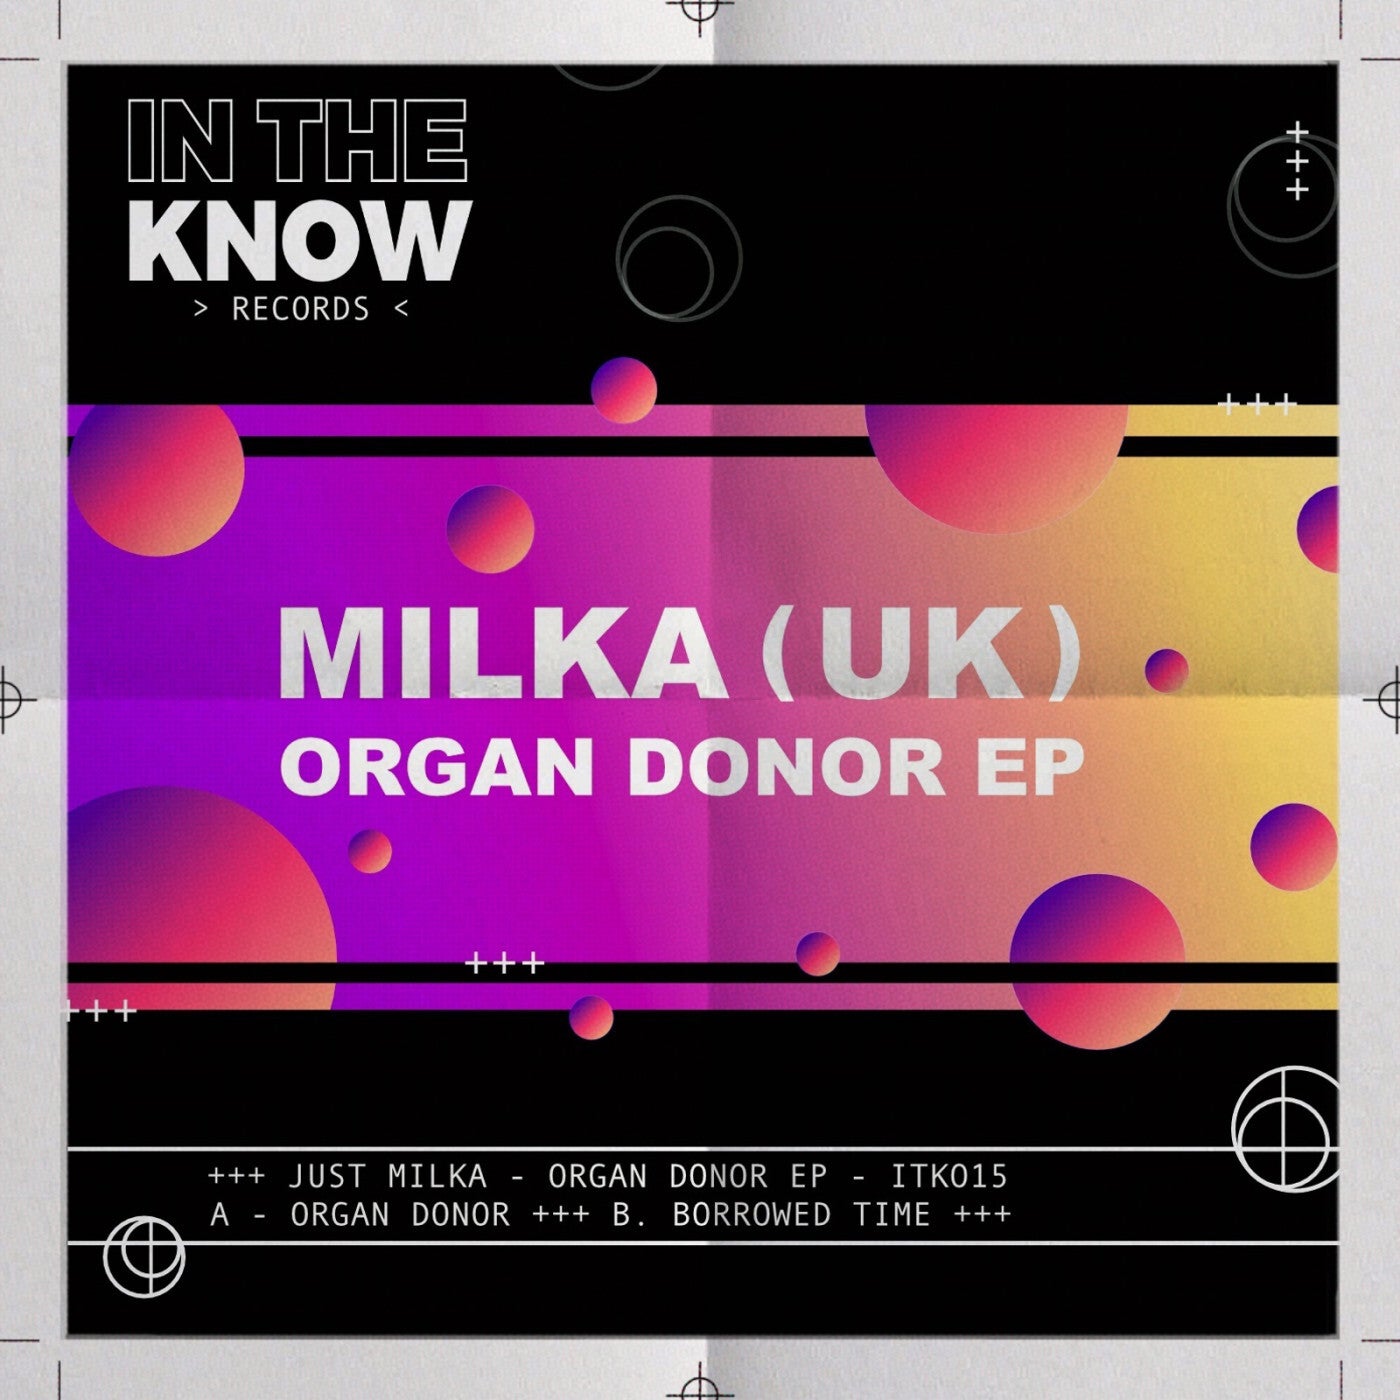 Organ Donor EP